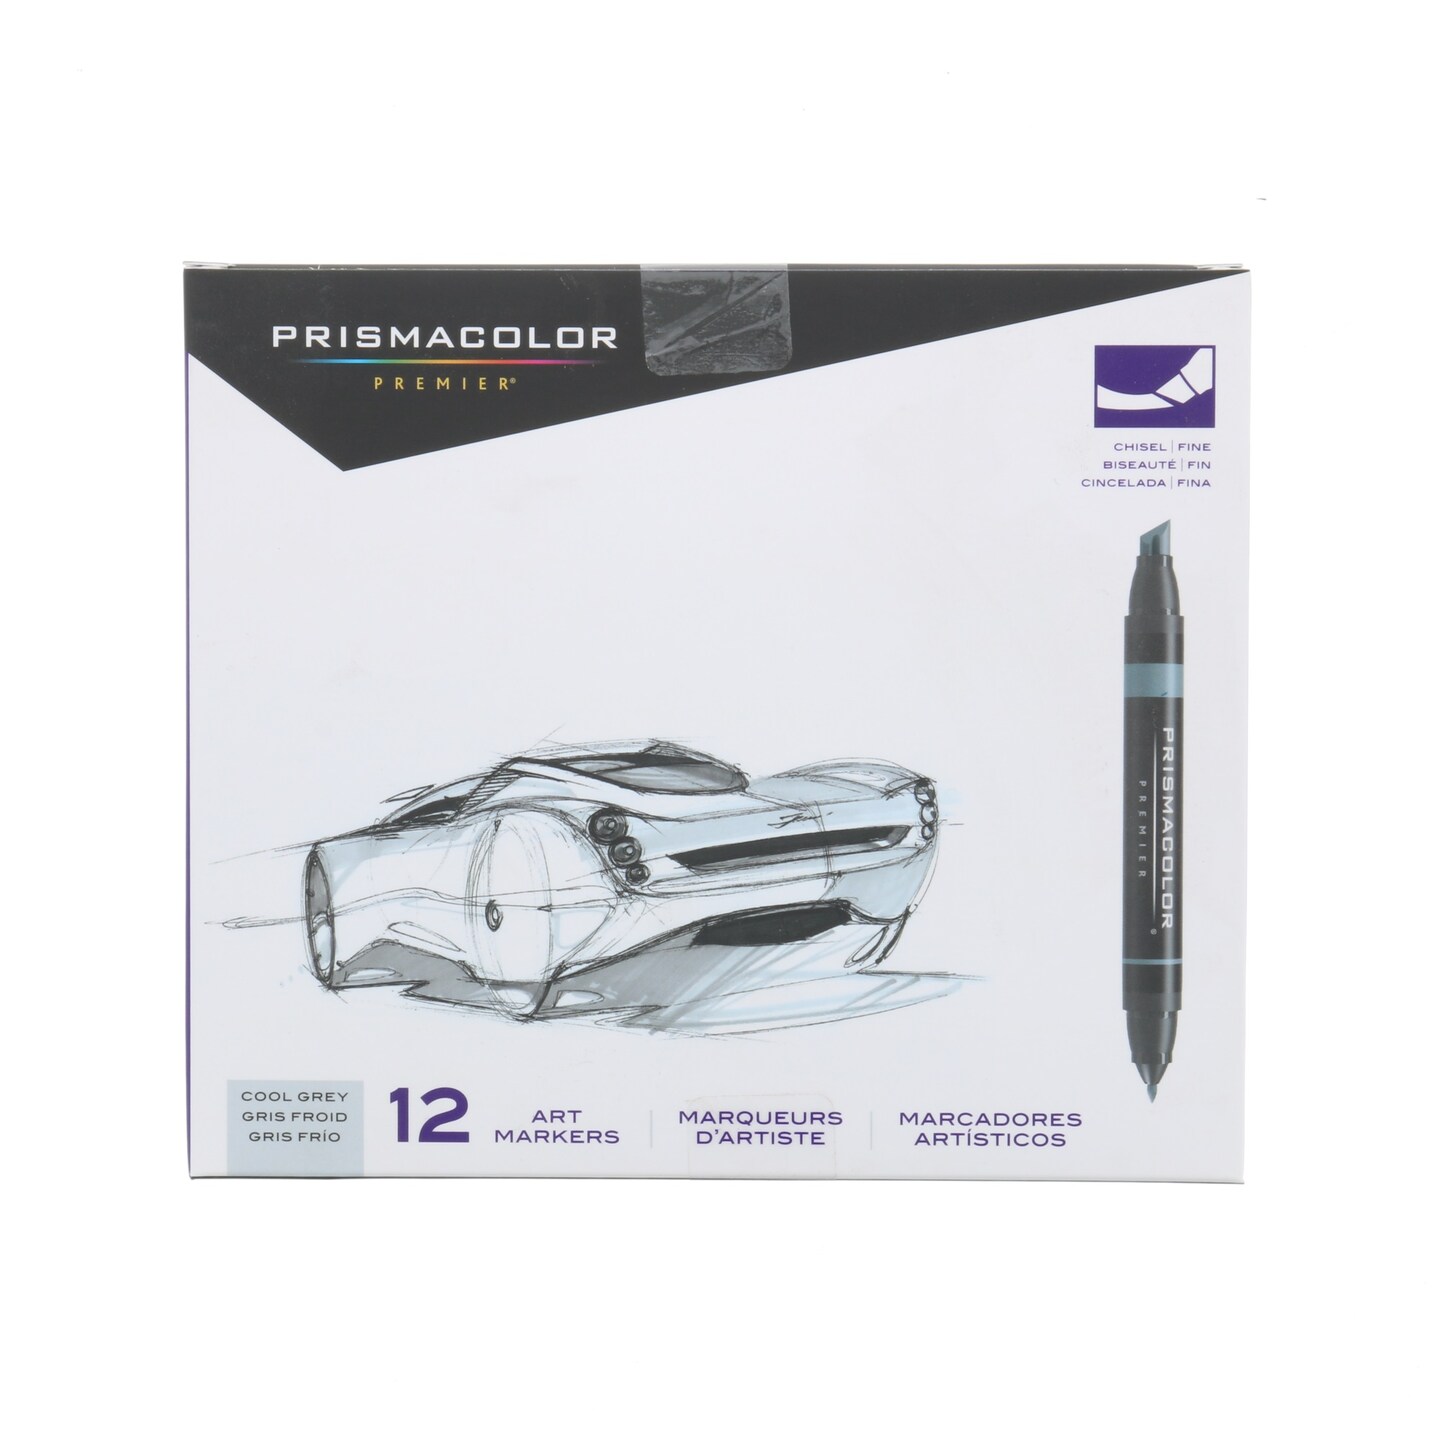 Prismacolor Premier Dual-Ended Art Markers